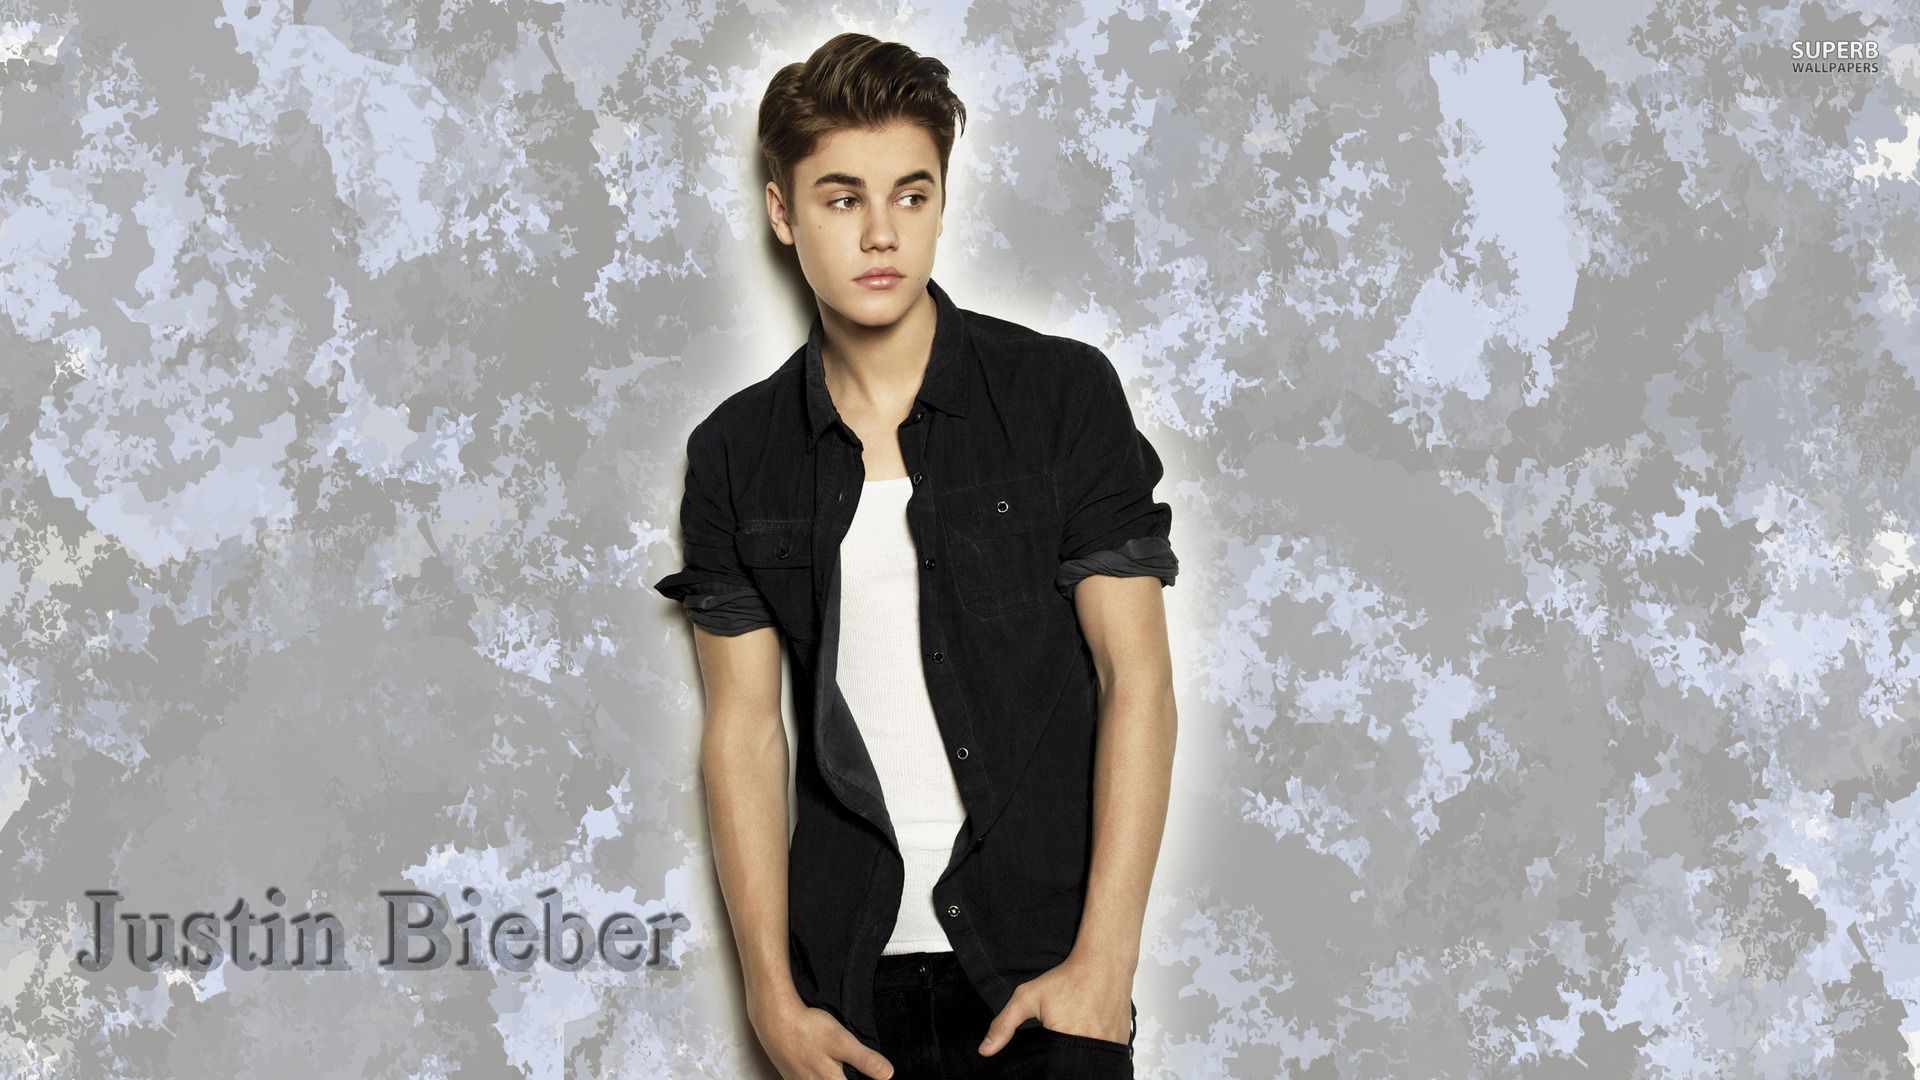 Justin Bieber wallpaper - Male celebrity wallpapers - #17182